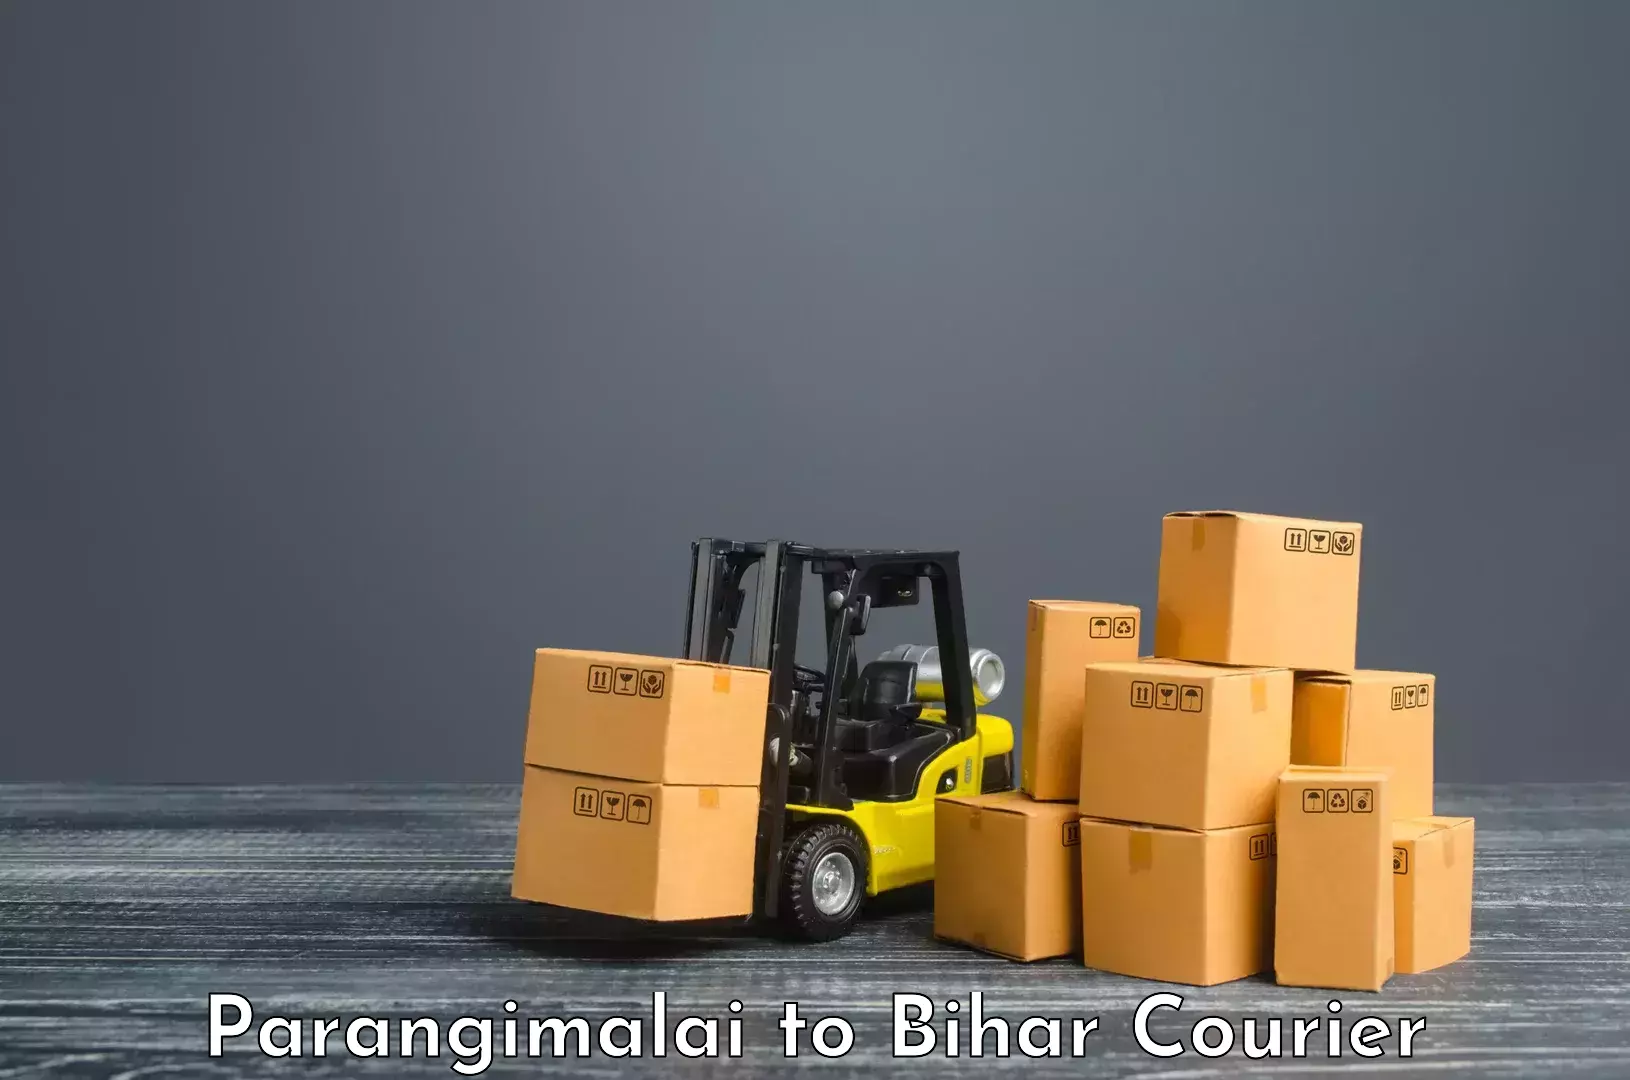 Express delivery solutions Parangimalai to Bihar